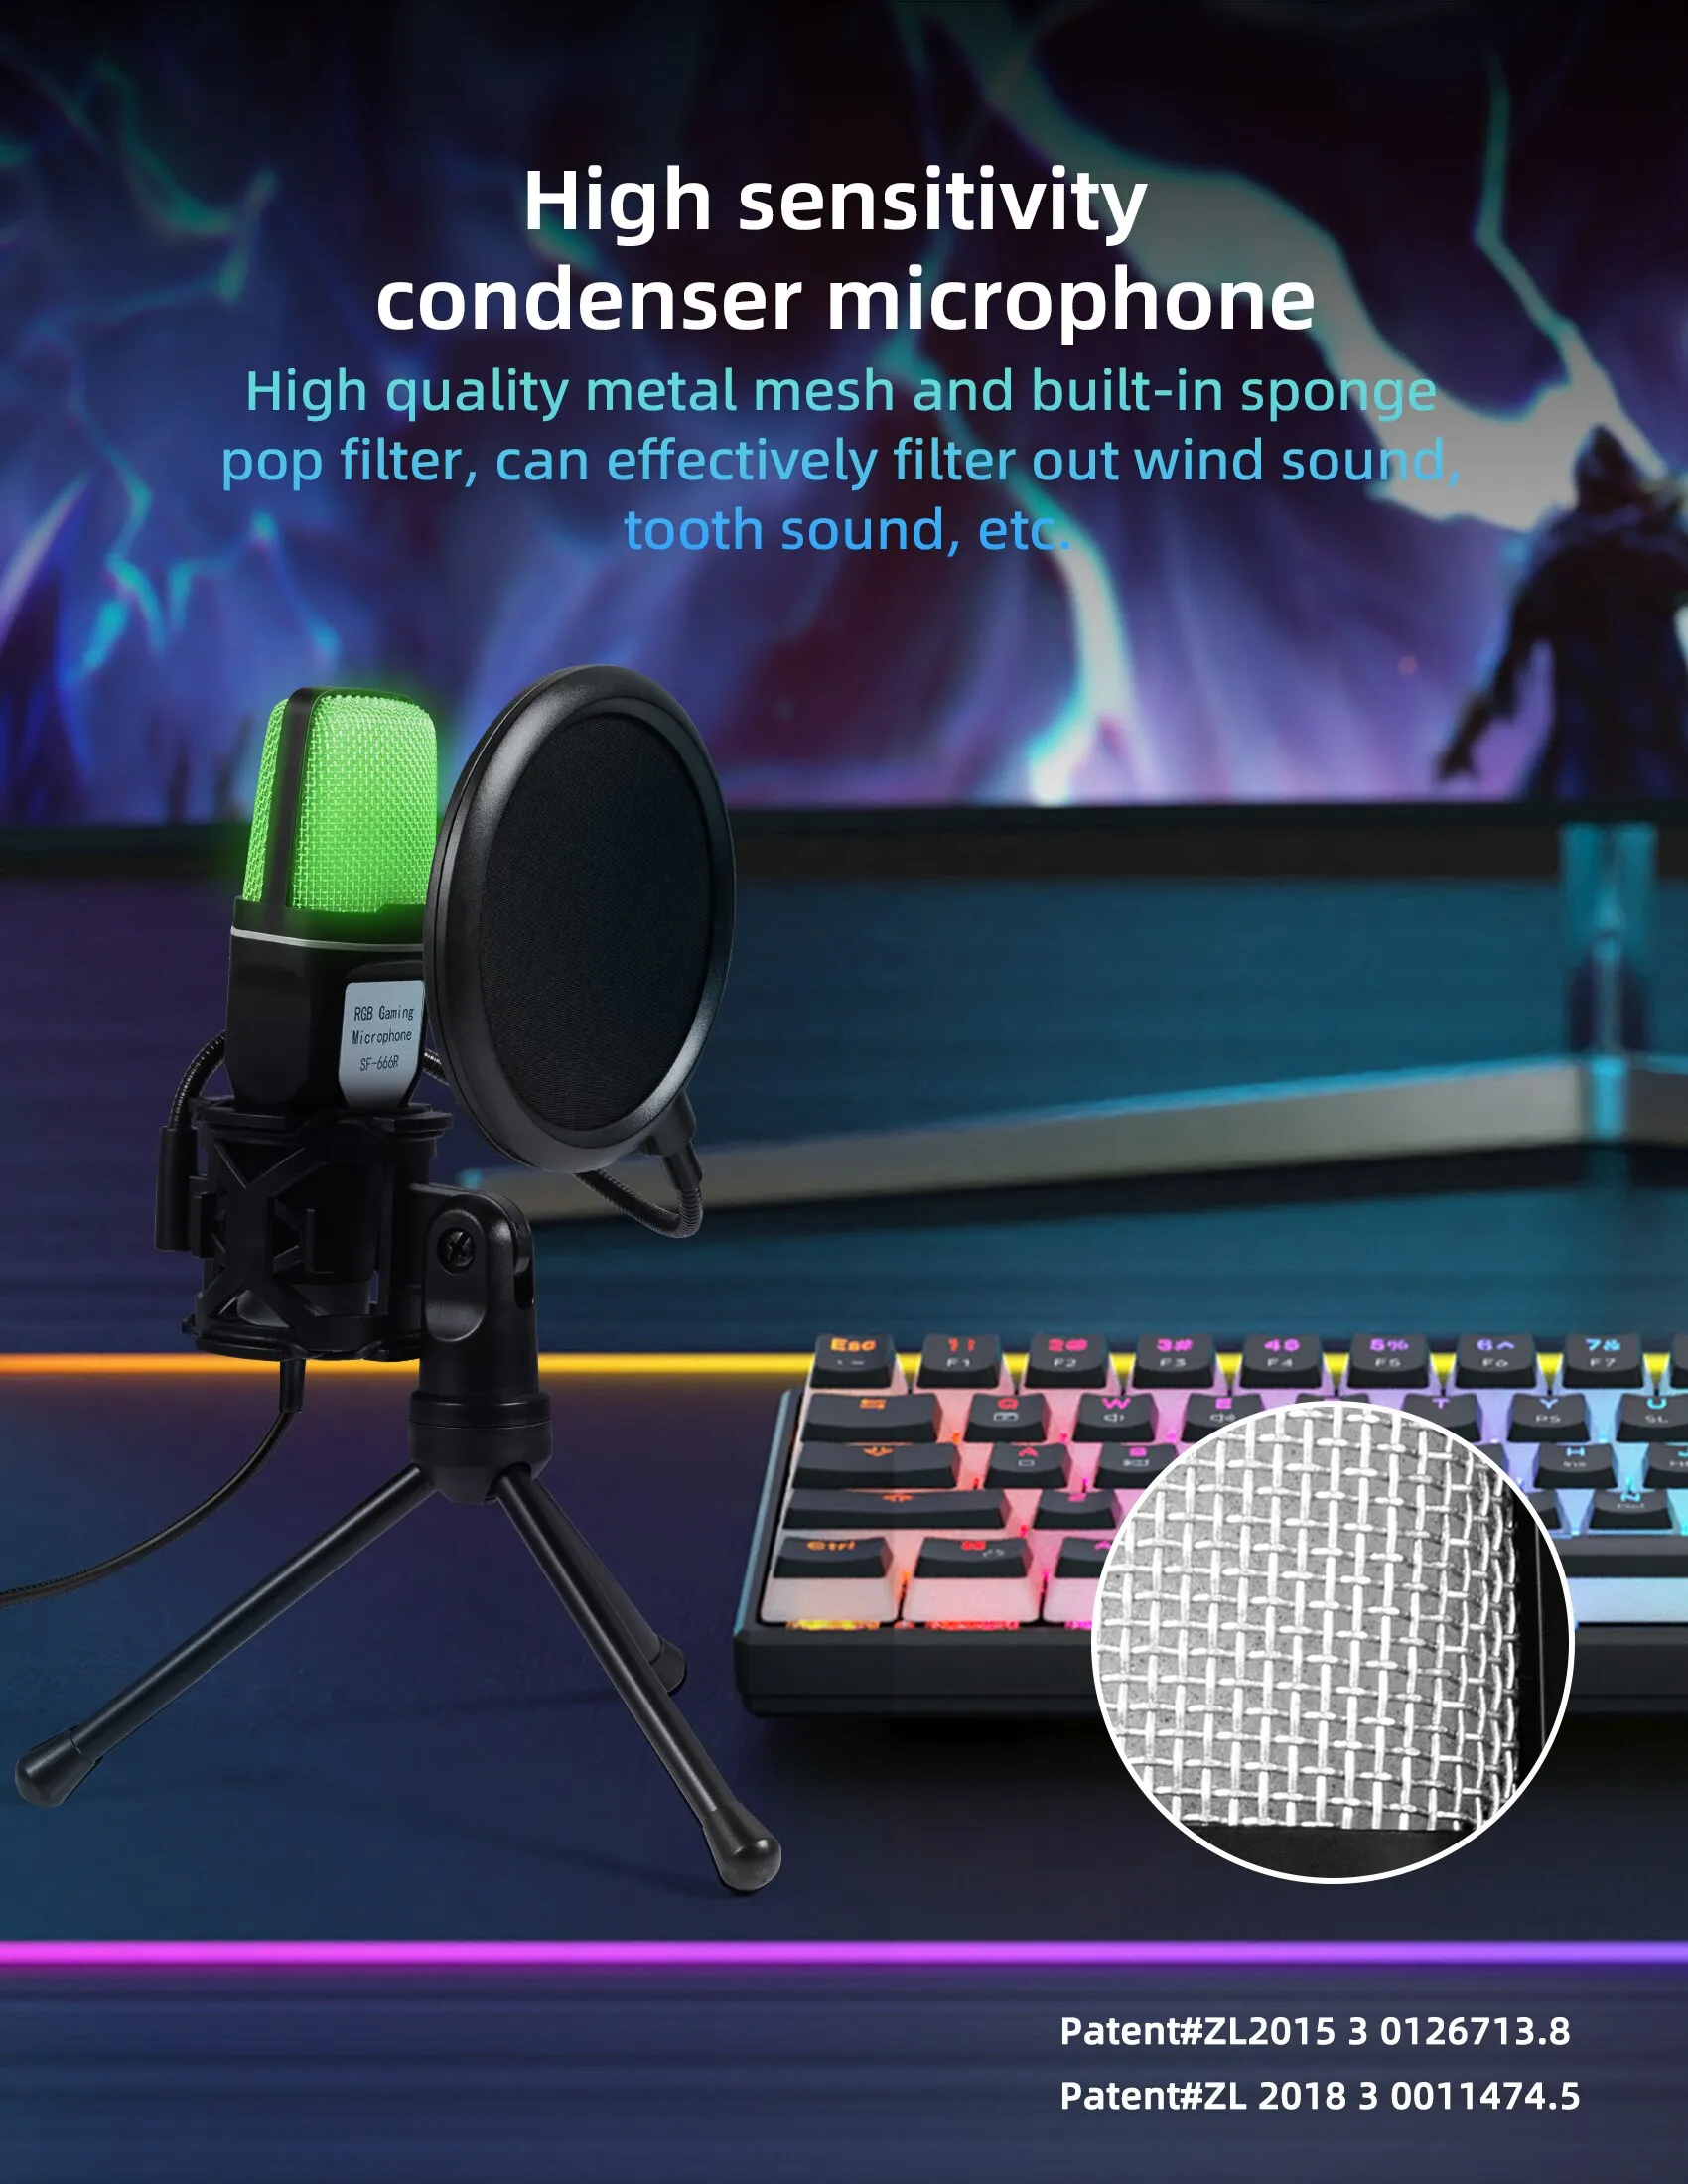 USB Condenser Microphone Gaming Mic YANMAI SF-666R ido.lk